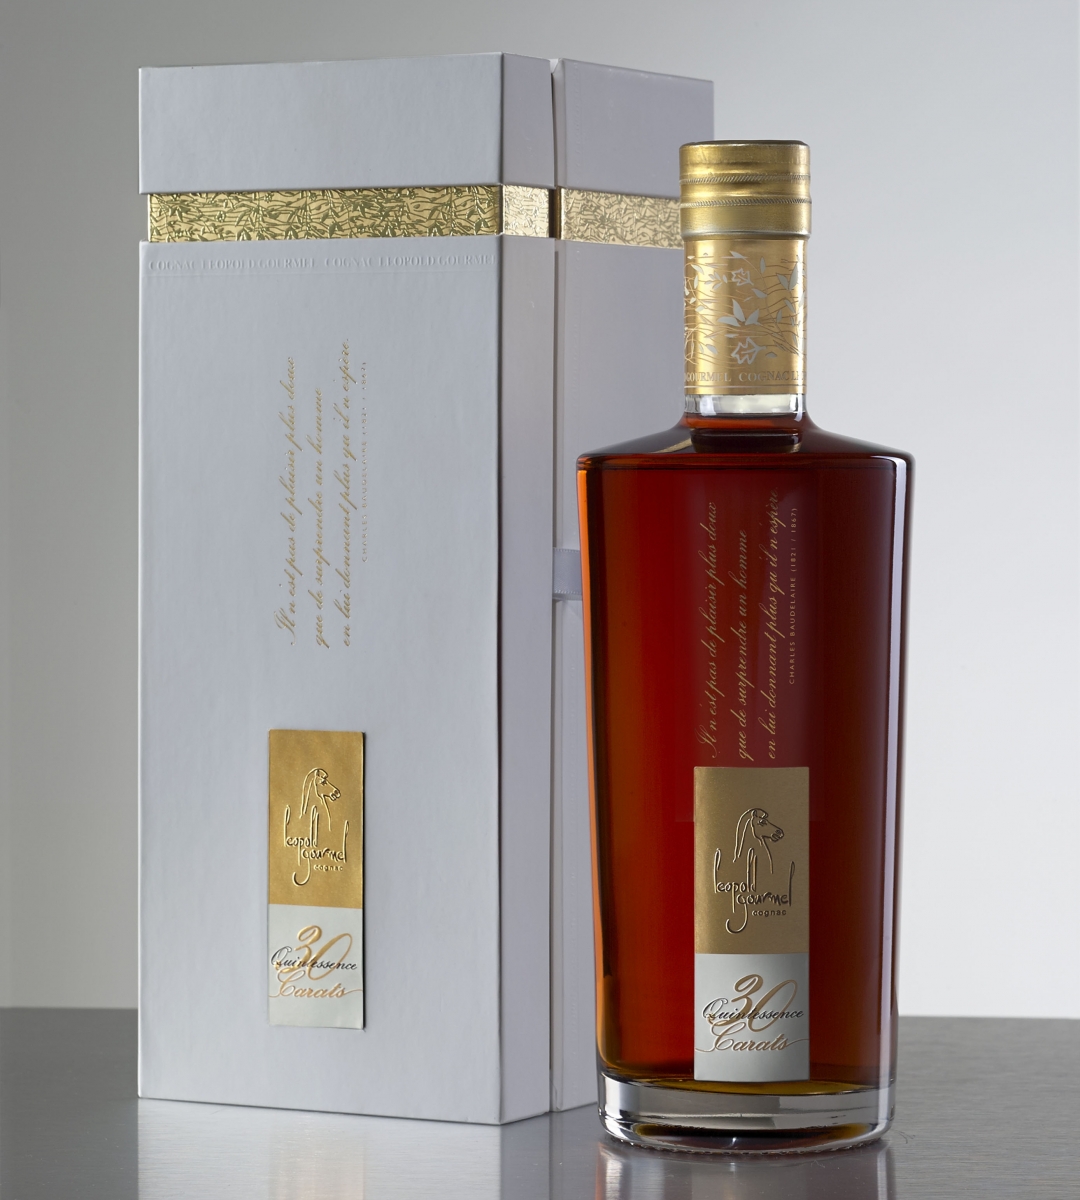 Cognac Léopold Gourmel - Quintessence 30 carats